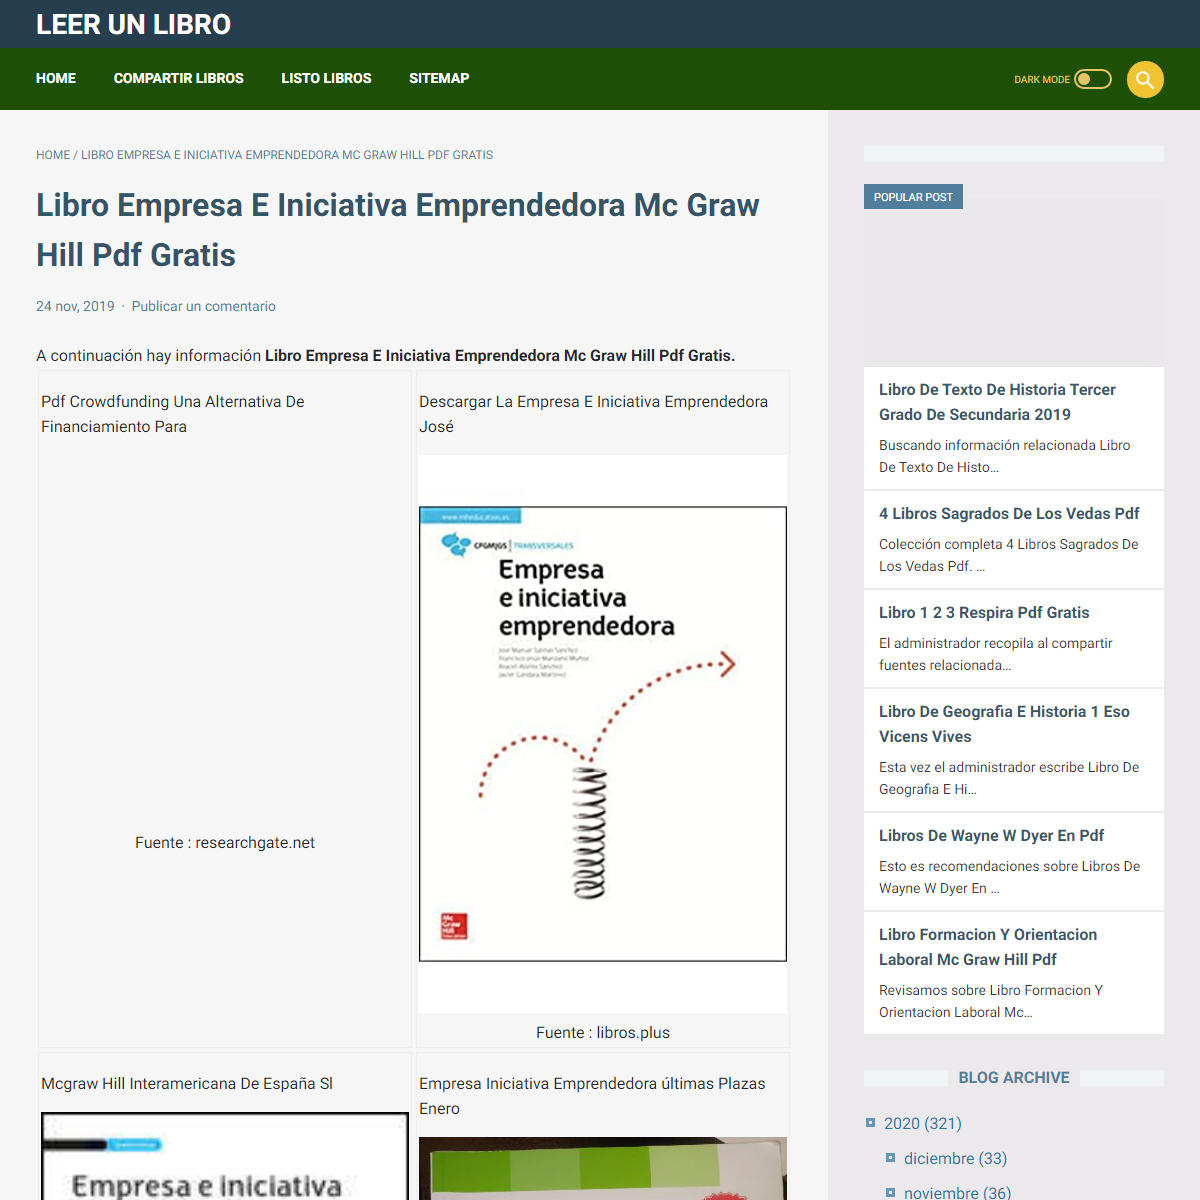 A complete backup of https://leerunlibros.blogspot.com/2019/11/libro-empresa-e-iniciativa-emprendedora.html